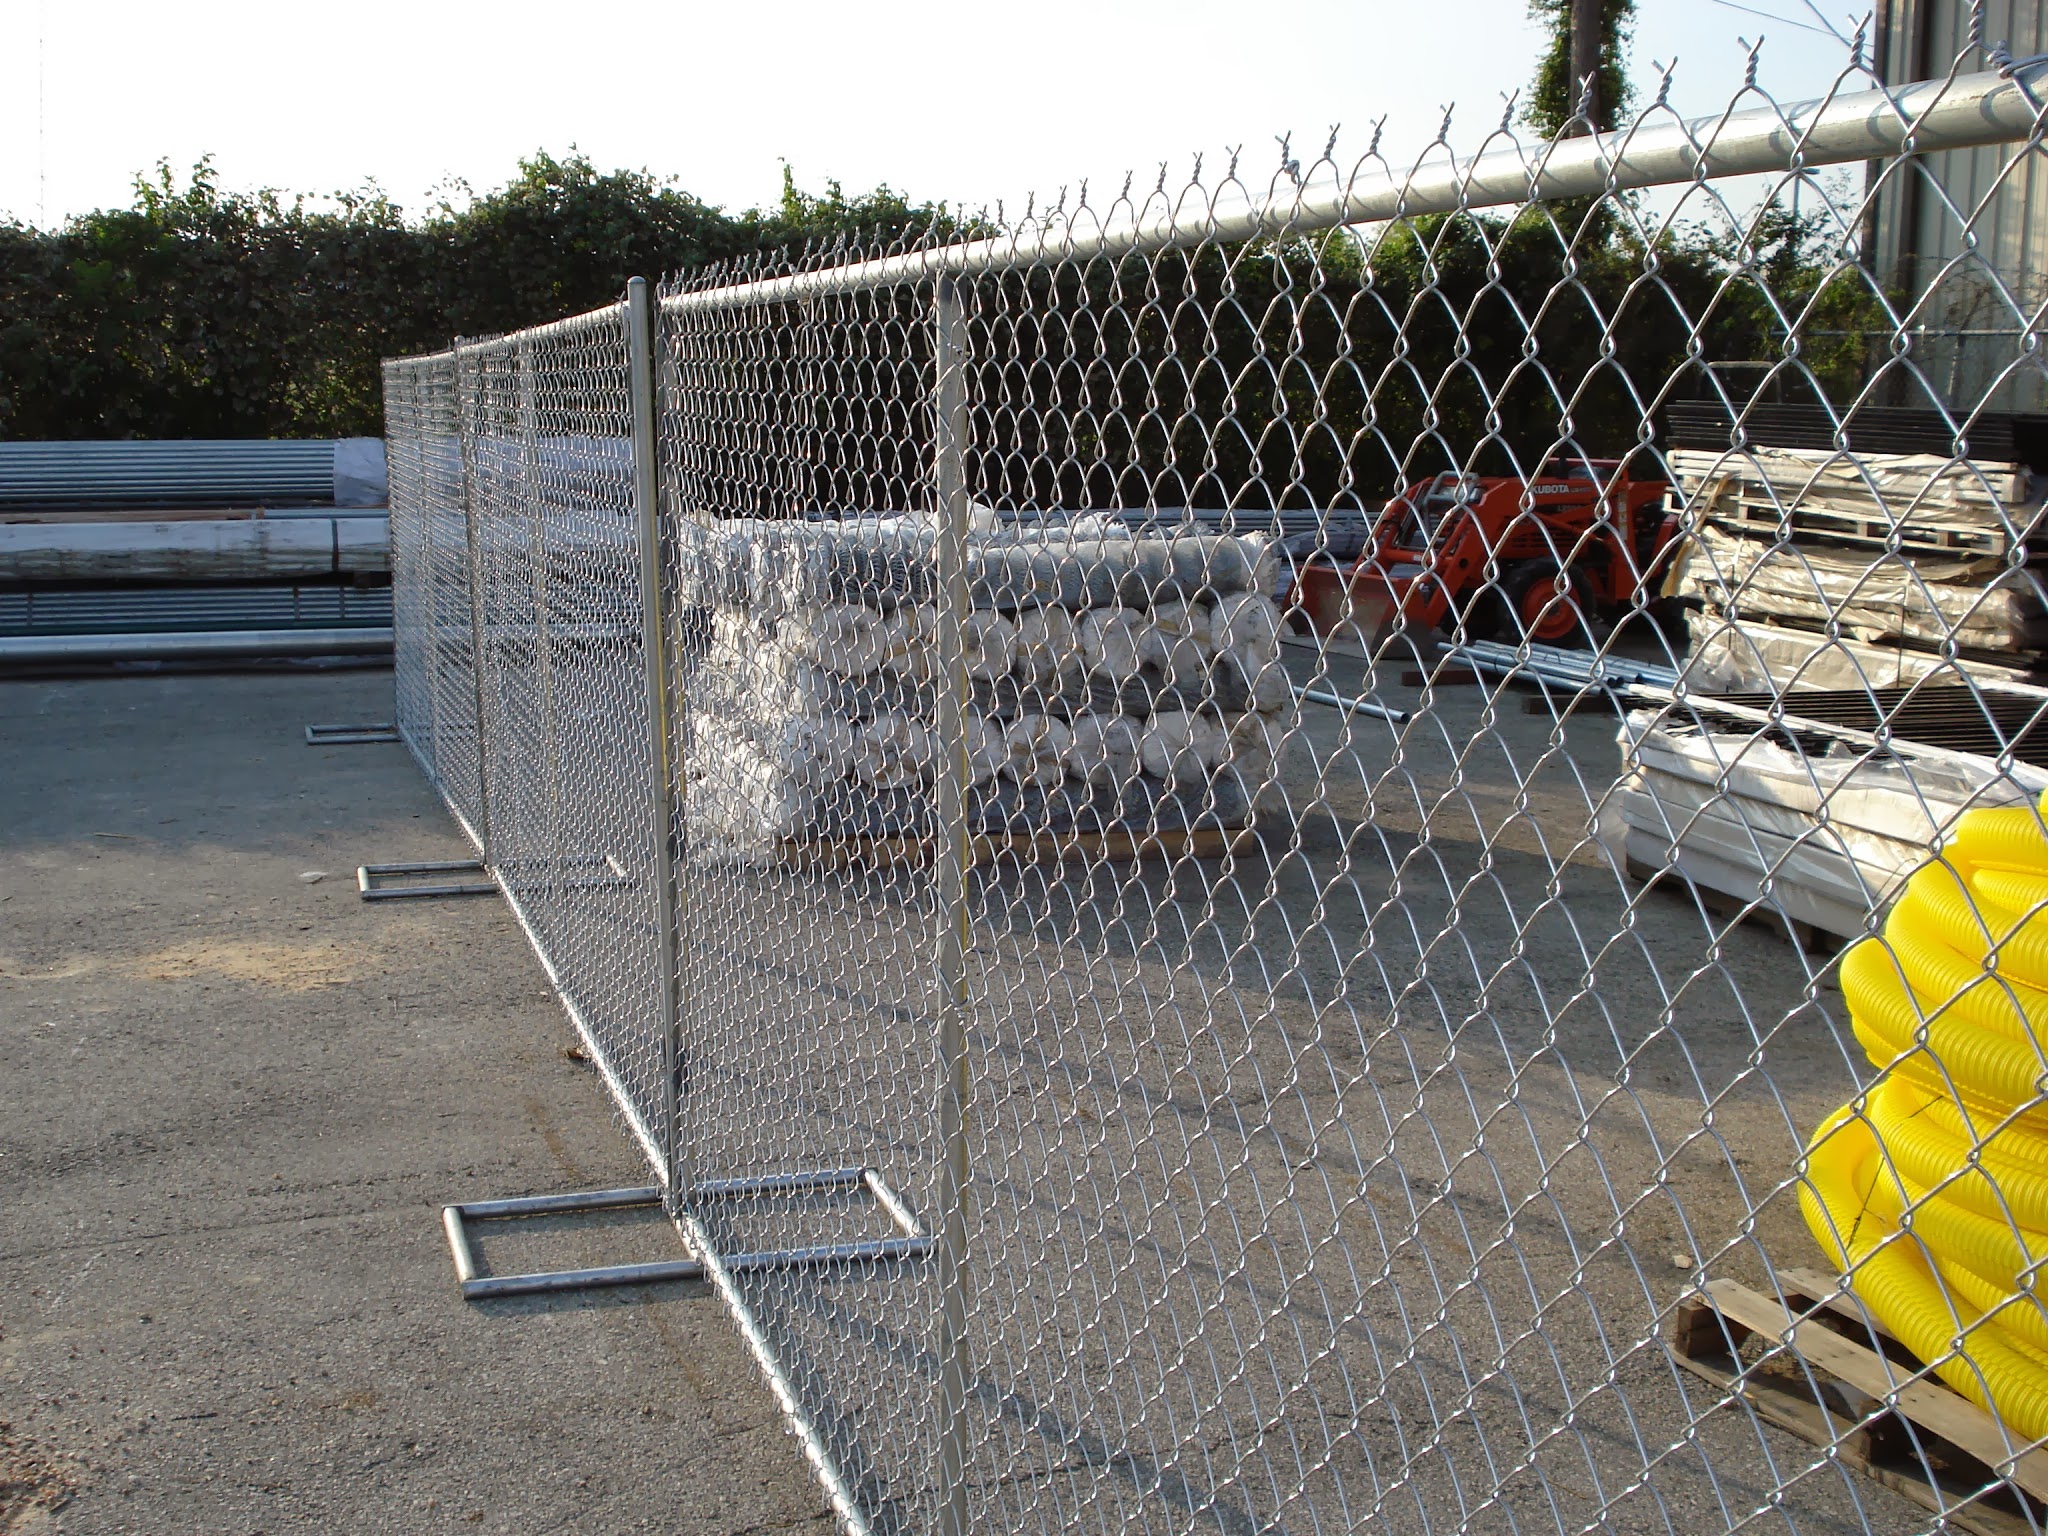 temporary event fencing.jpg